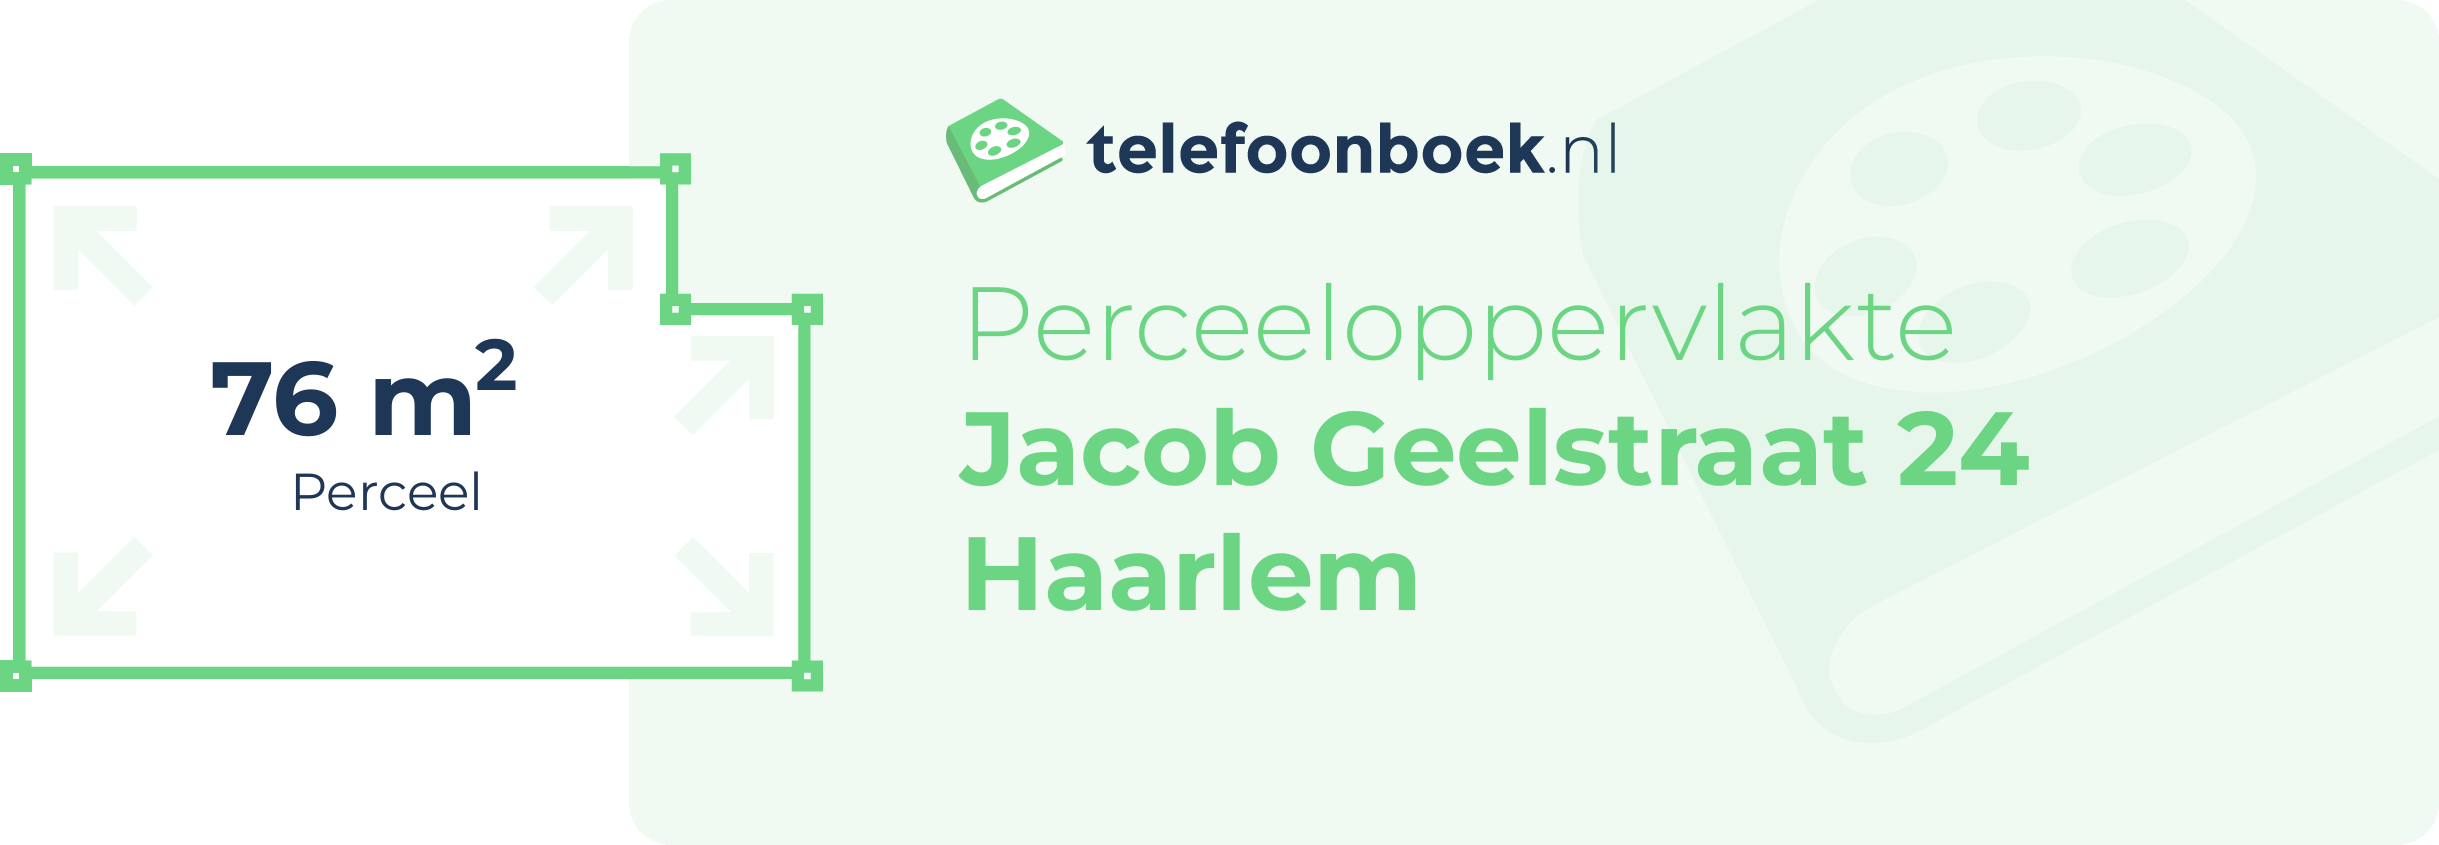 Perceeloppervlakte Jacob Geelstraat 24 Haarlem